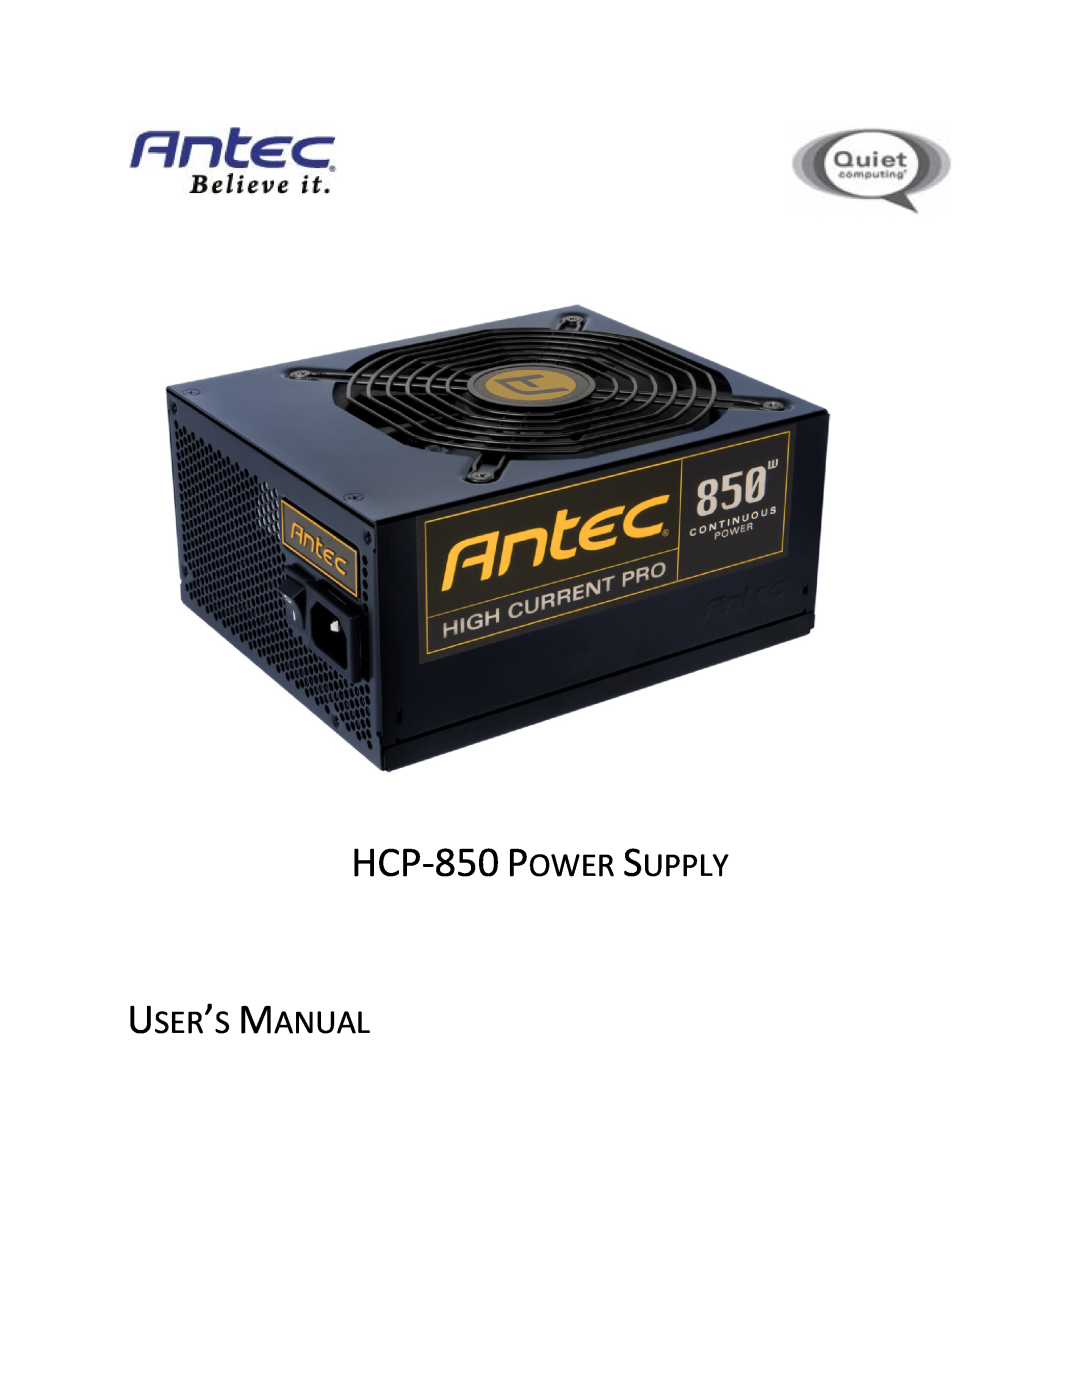 Antec user manual HCP-850 POWER SUPPLY, User’S Manual 